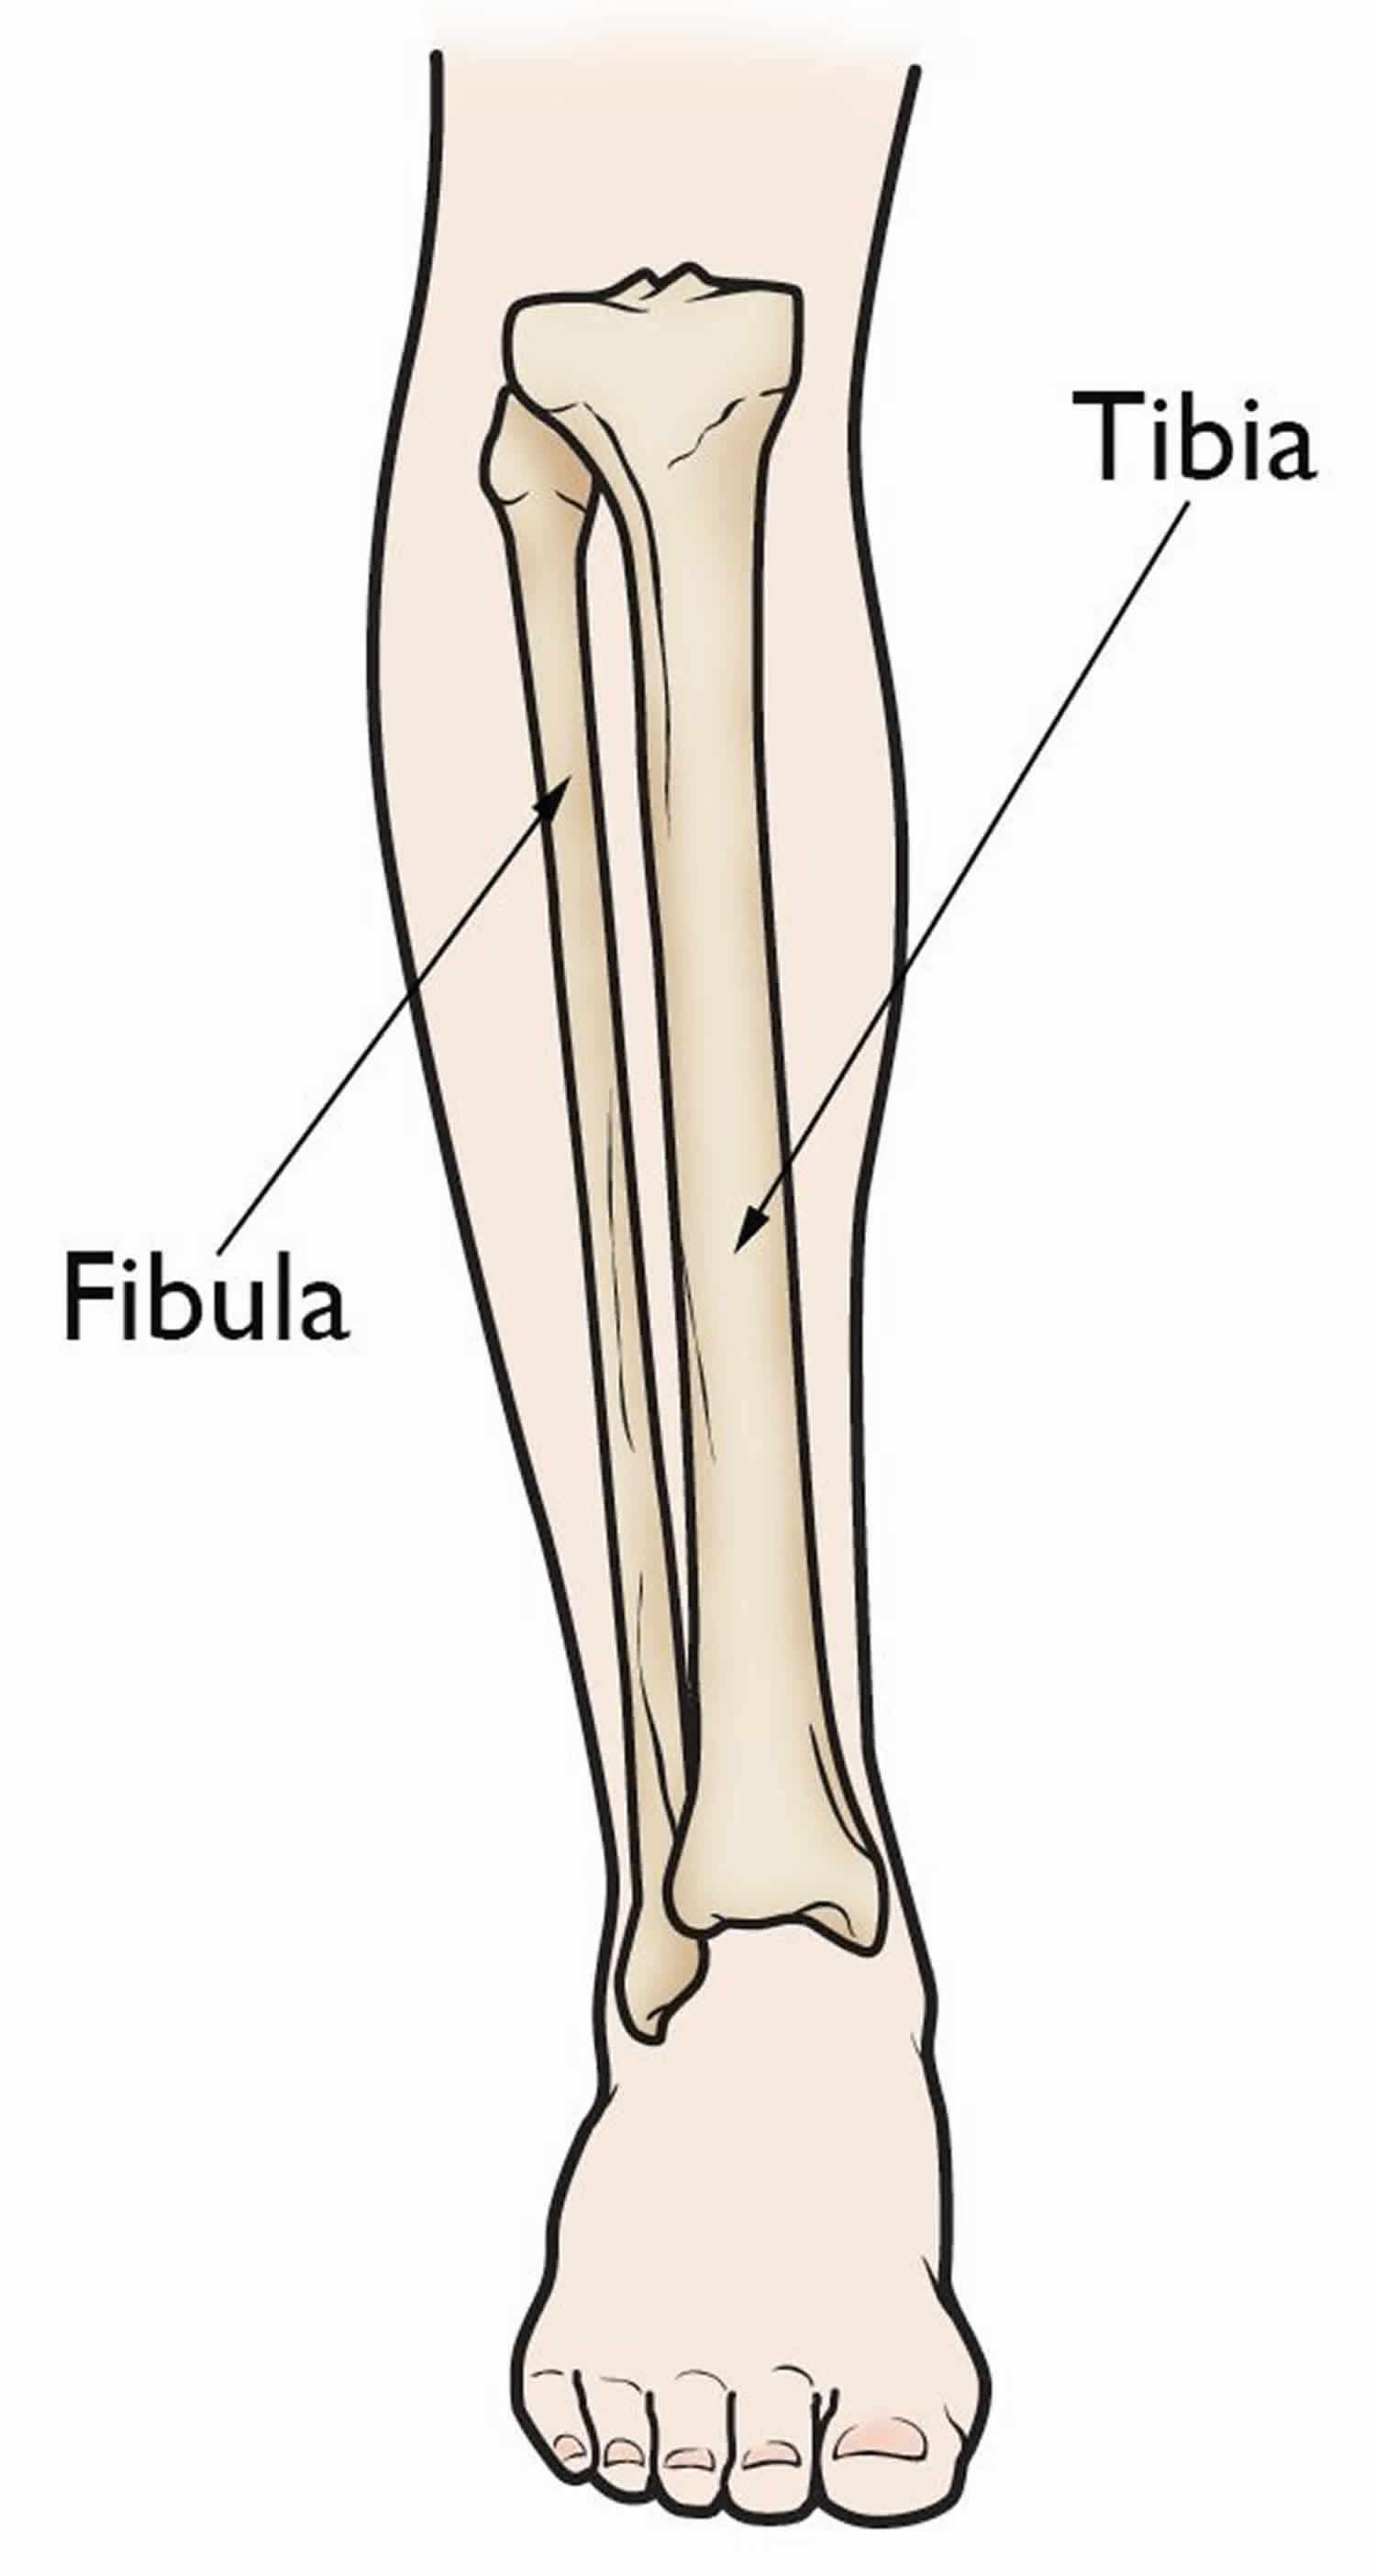 Normal leg bones